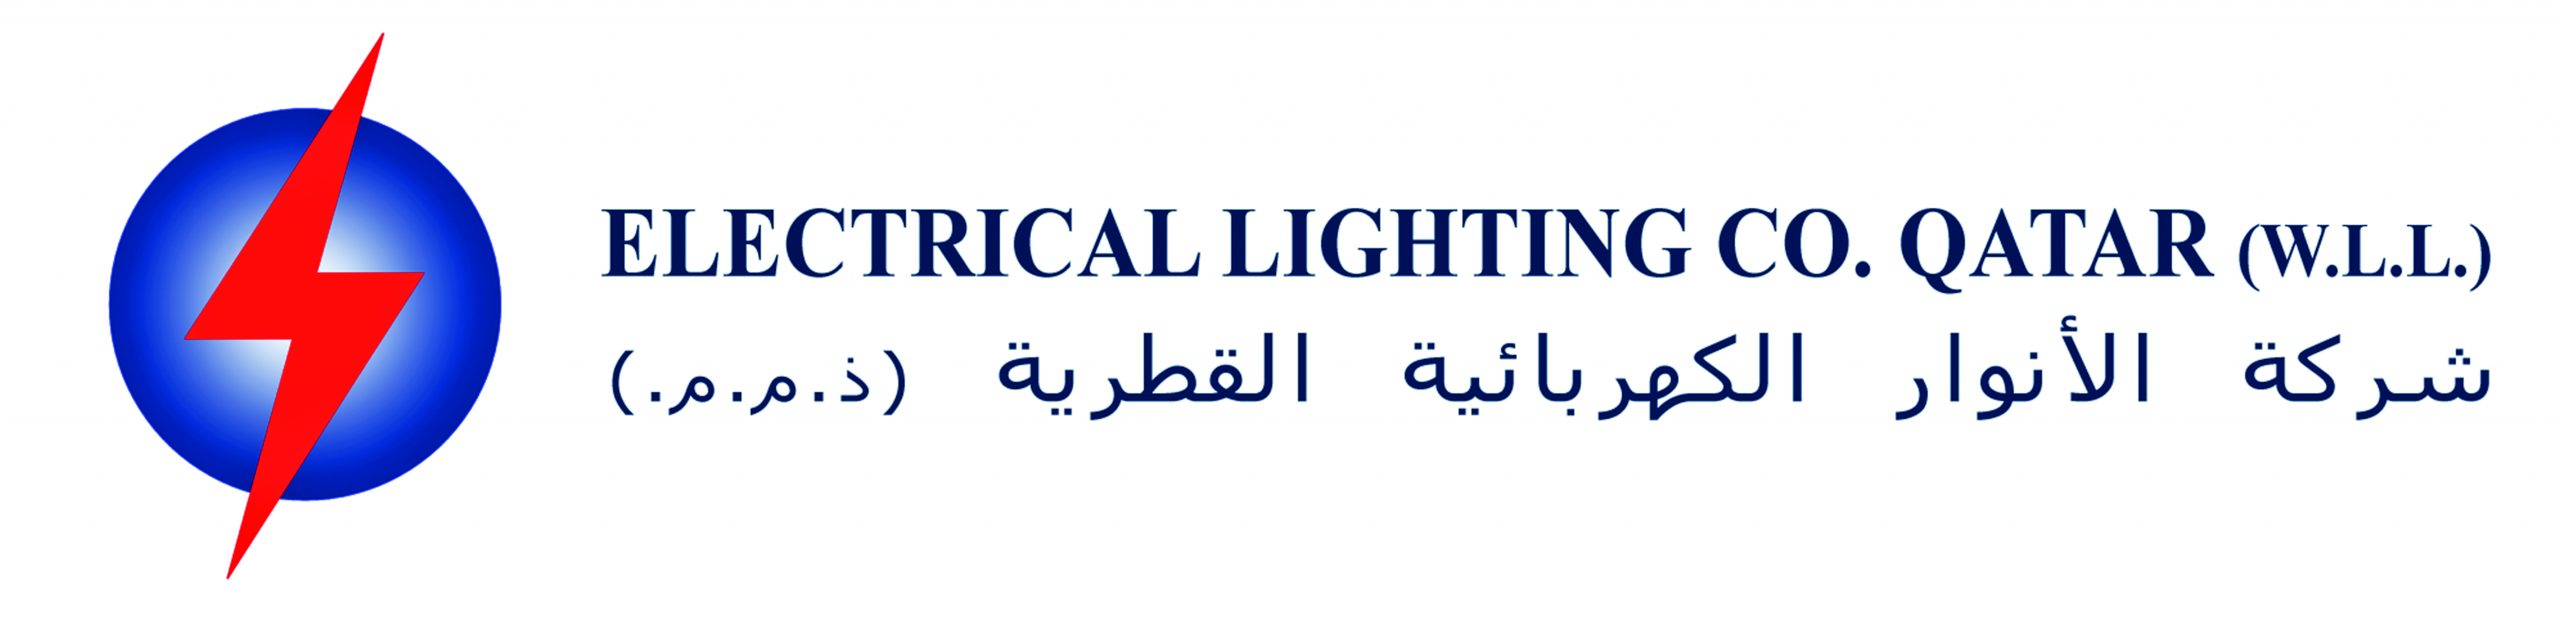 Electrical Lighting Co. Qatar W.L.L